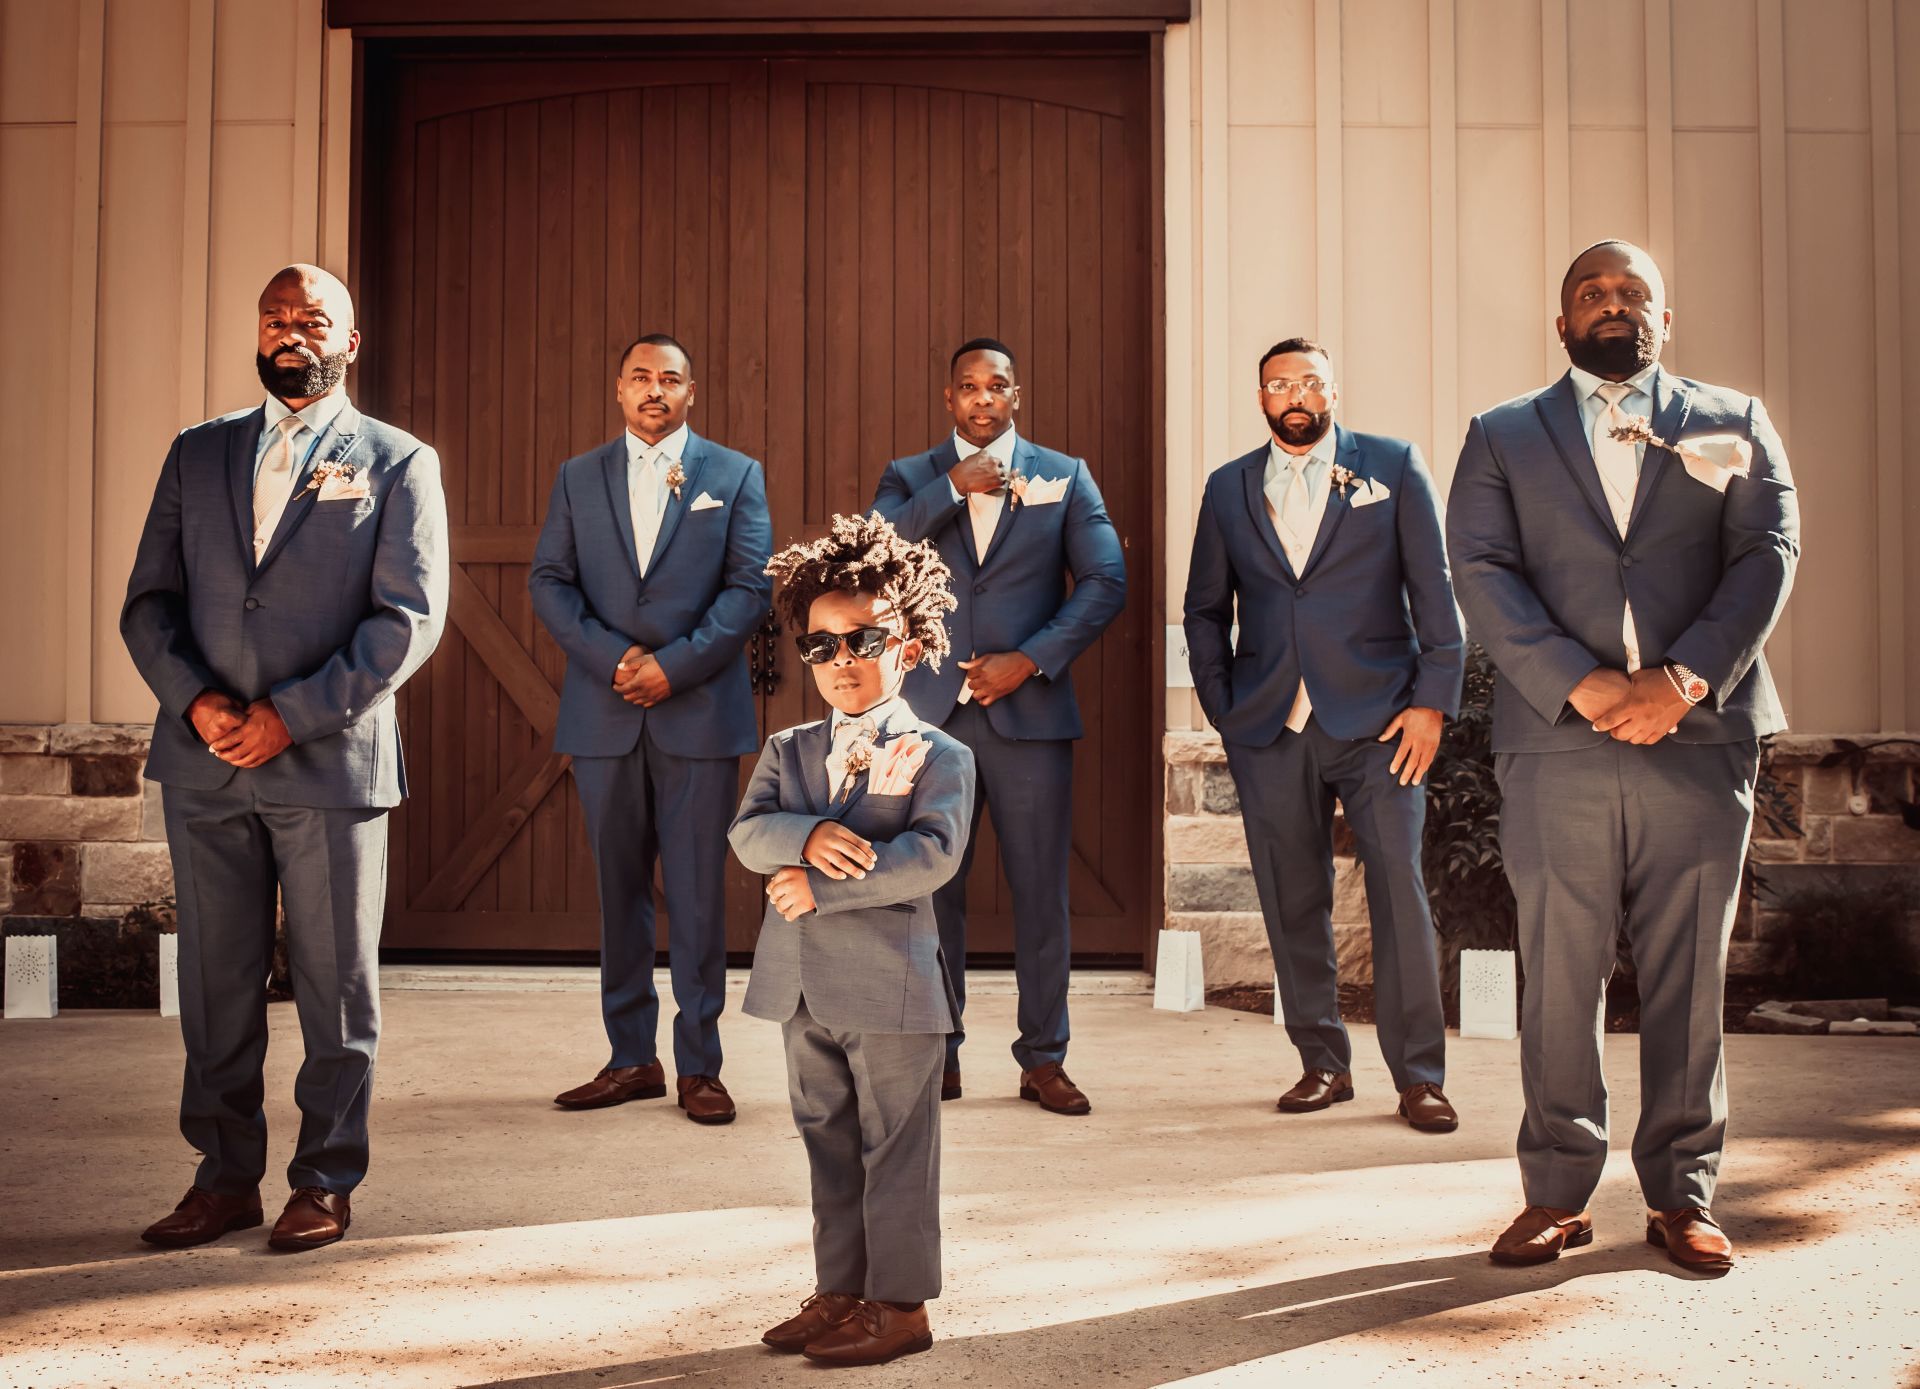 Tuxedo Suit Rentals for Real Weddings